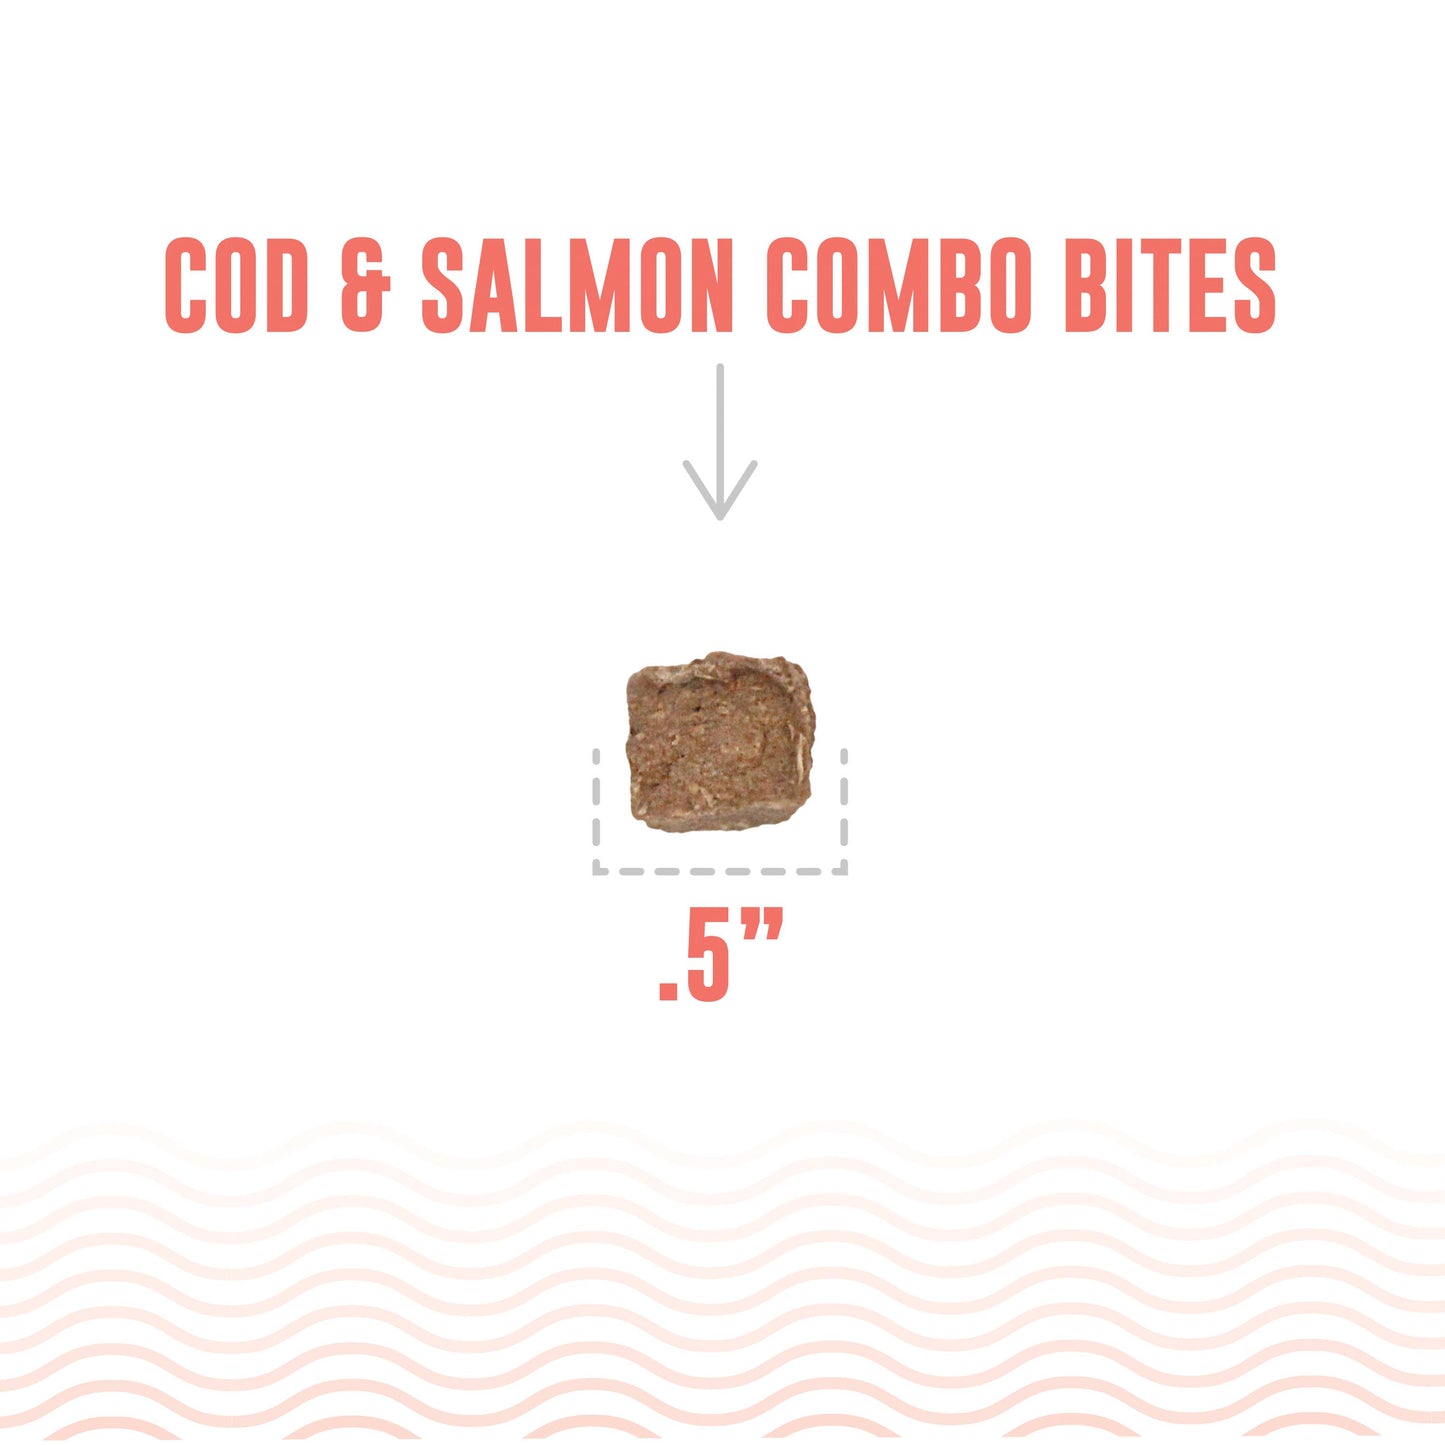 Icelandic+ Cod & Salmon Combo Bites Fish Dog Treat 3.0-oz: Default Title